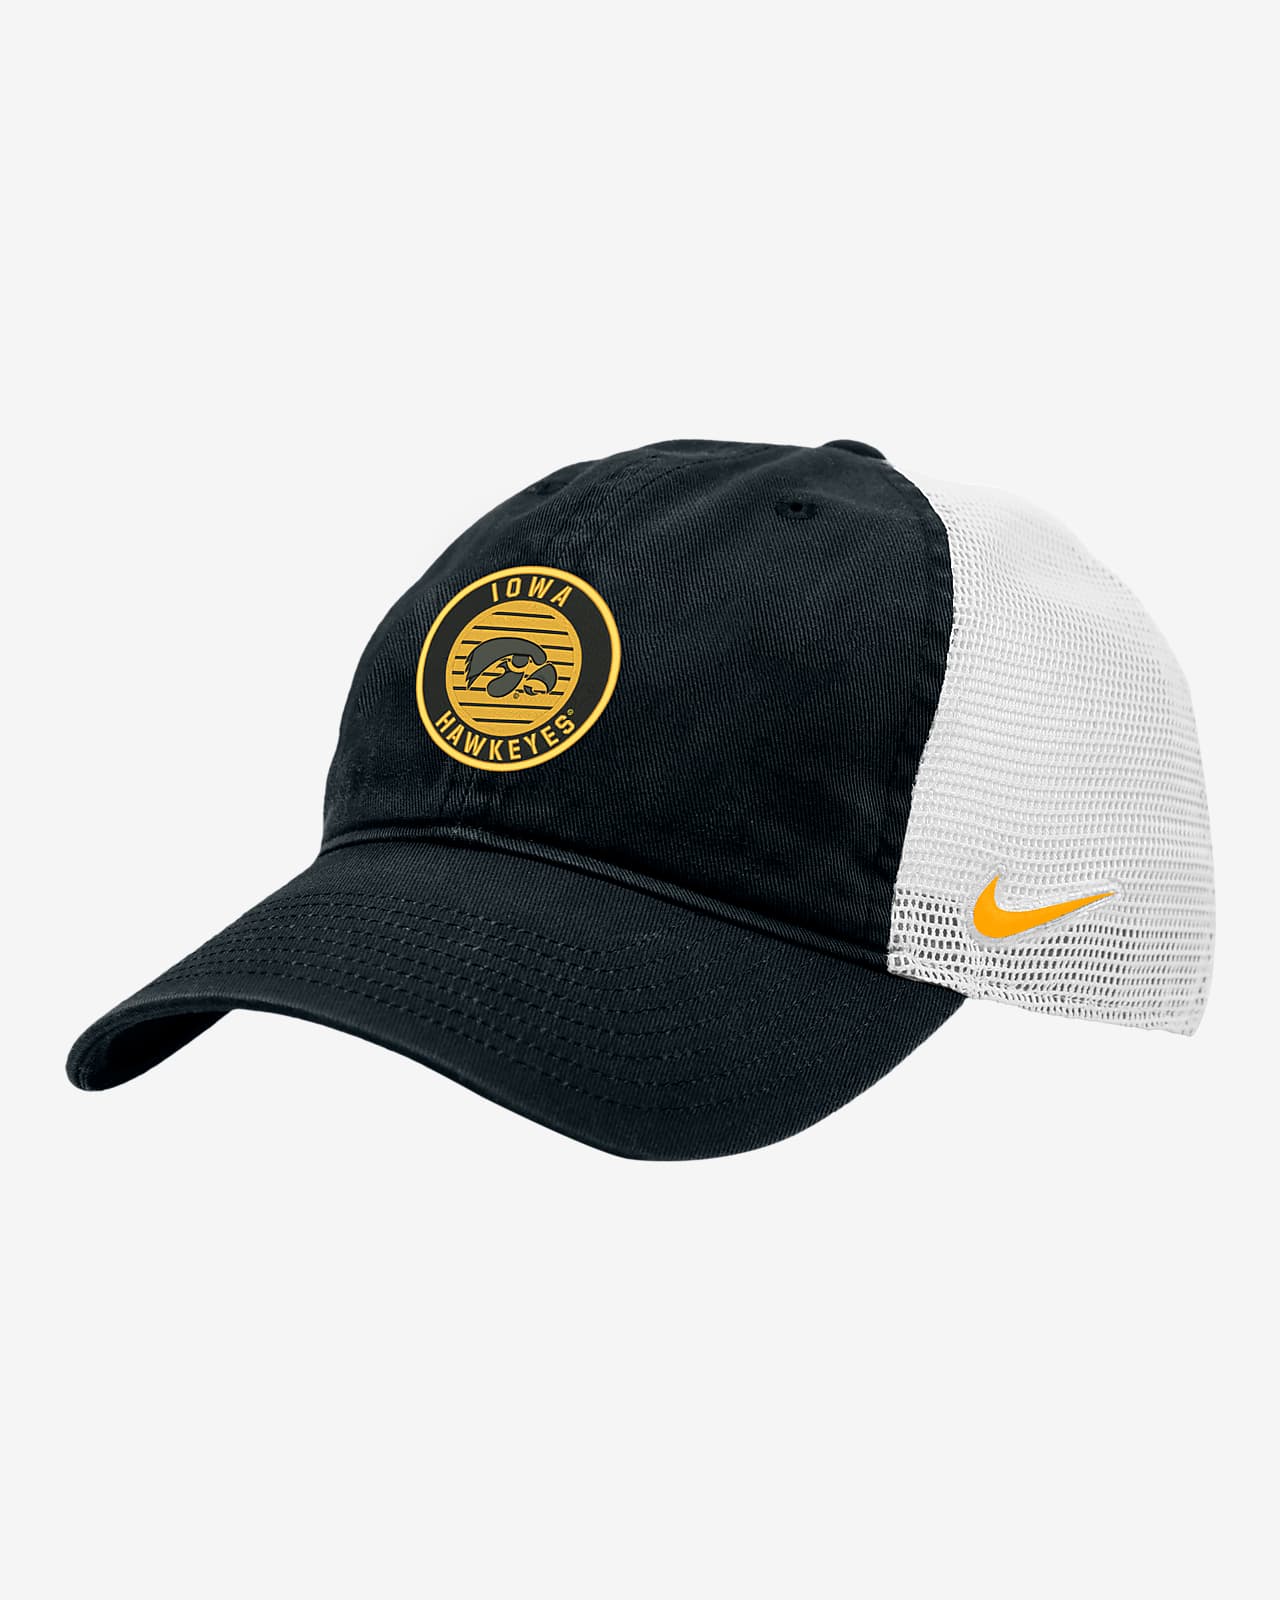 Iowa Heritage86 Nike College Trucker Hat